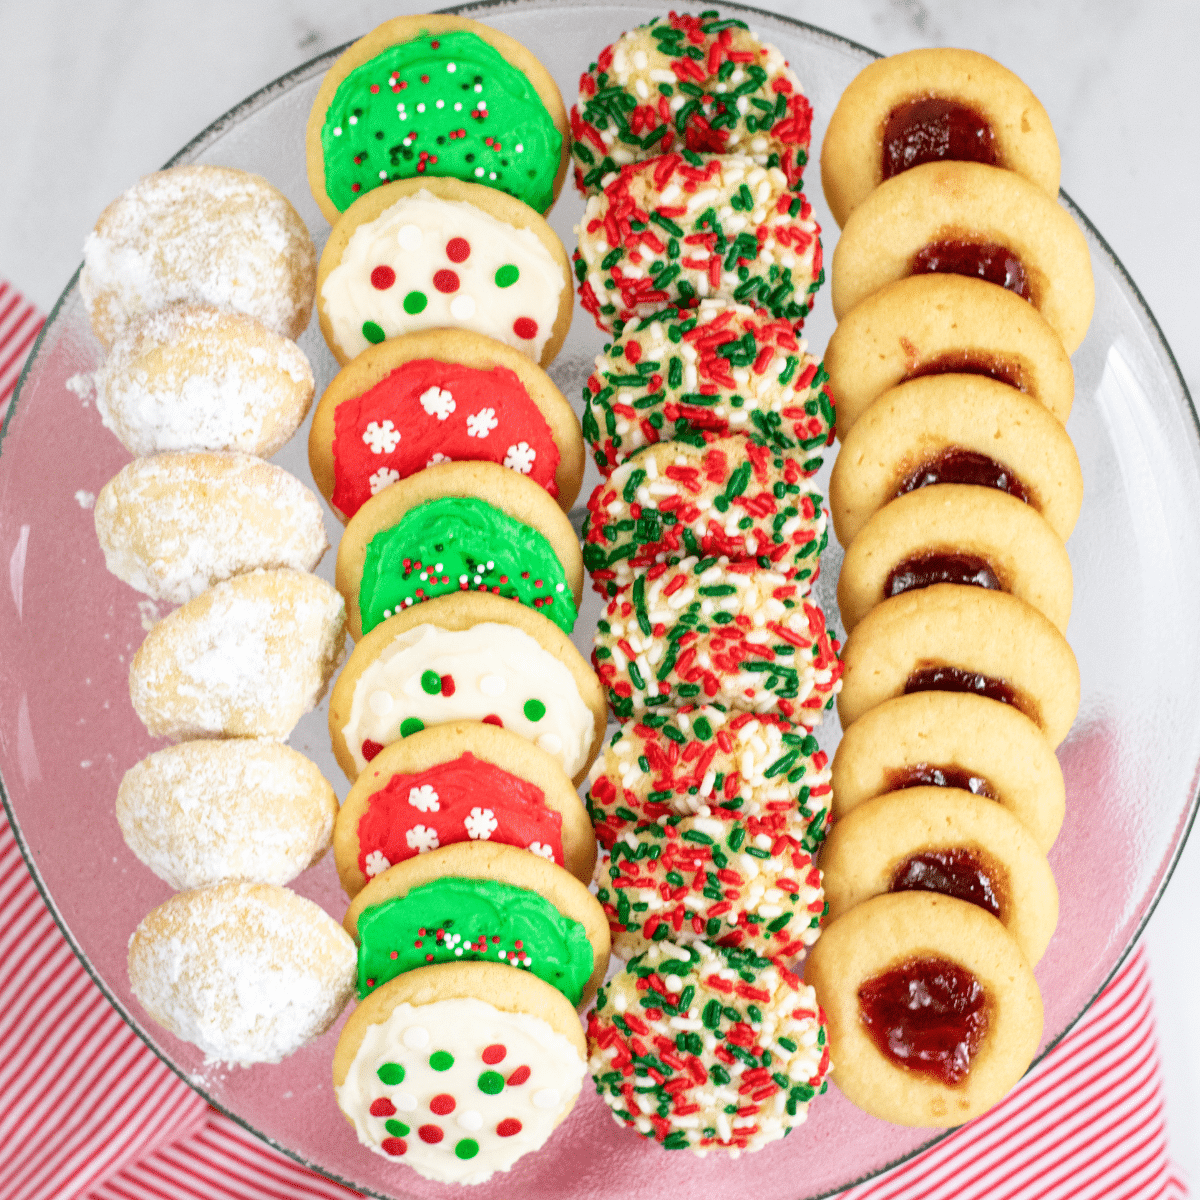 a plate of Christmas sugar cookies